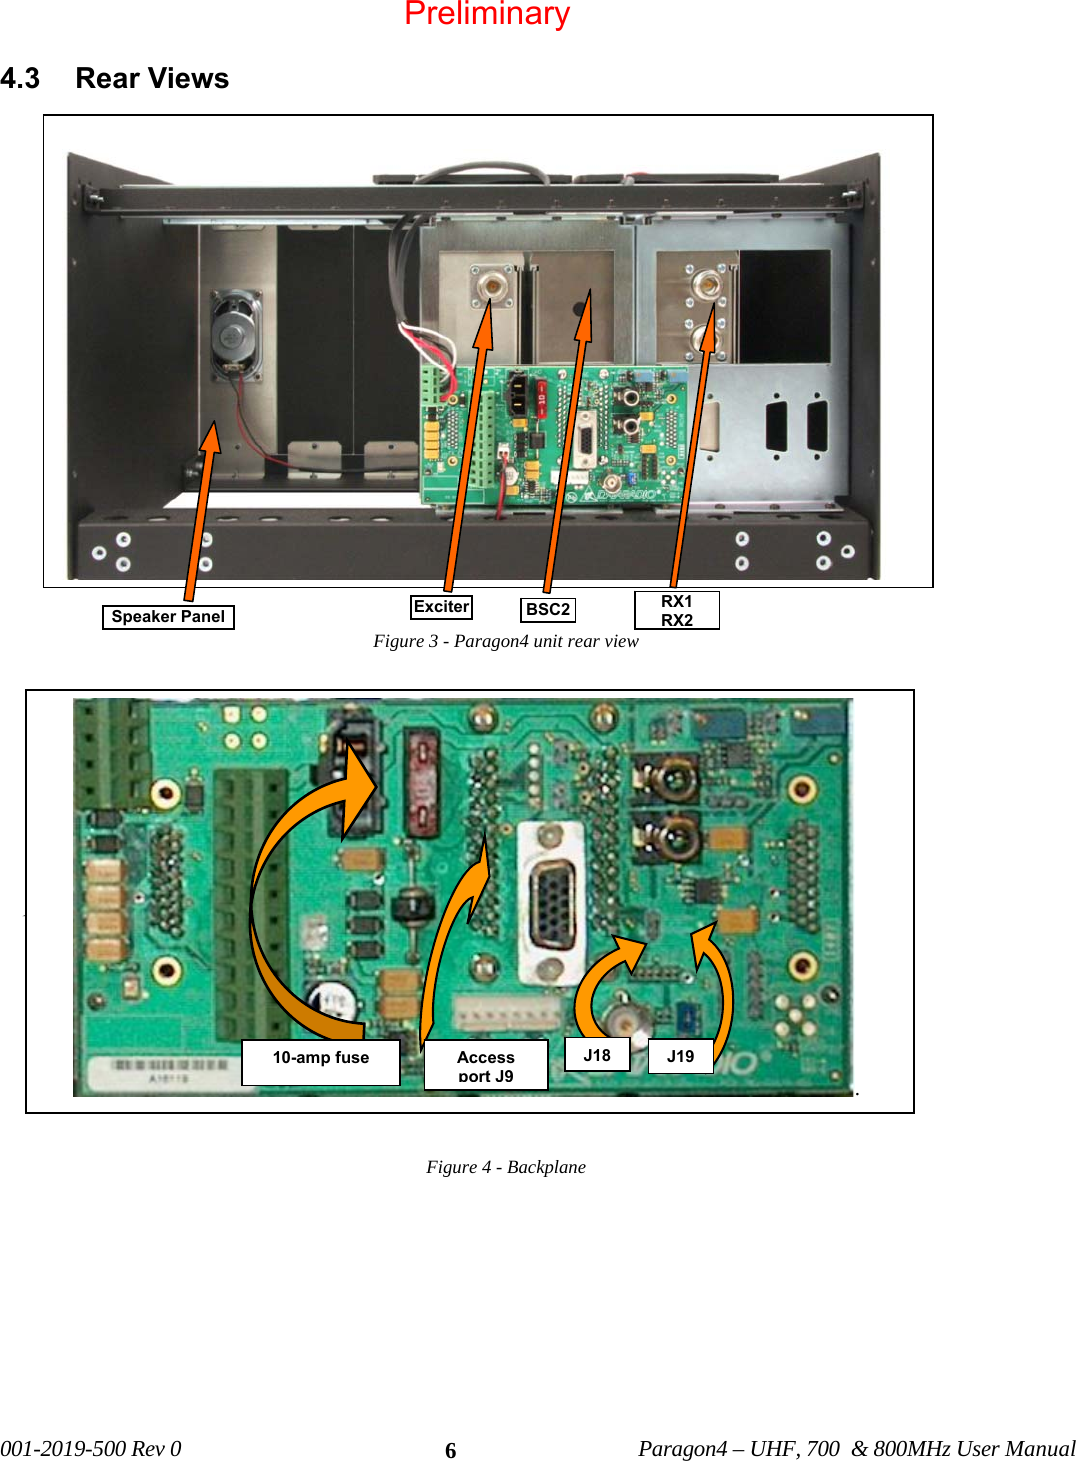   001-2019-500 Rev 0          Paragon4 – UHF, 700  &amp; 800MHz User Manual   64.3 Rear Views Figure 3 - Paragon4 unit rear view  Figure 4 - Backplane    RX1 RX2BSC2ExciterSpeaker Panel       .      10-amp fuse  J18Access  port J9J19Preliminary